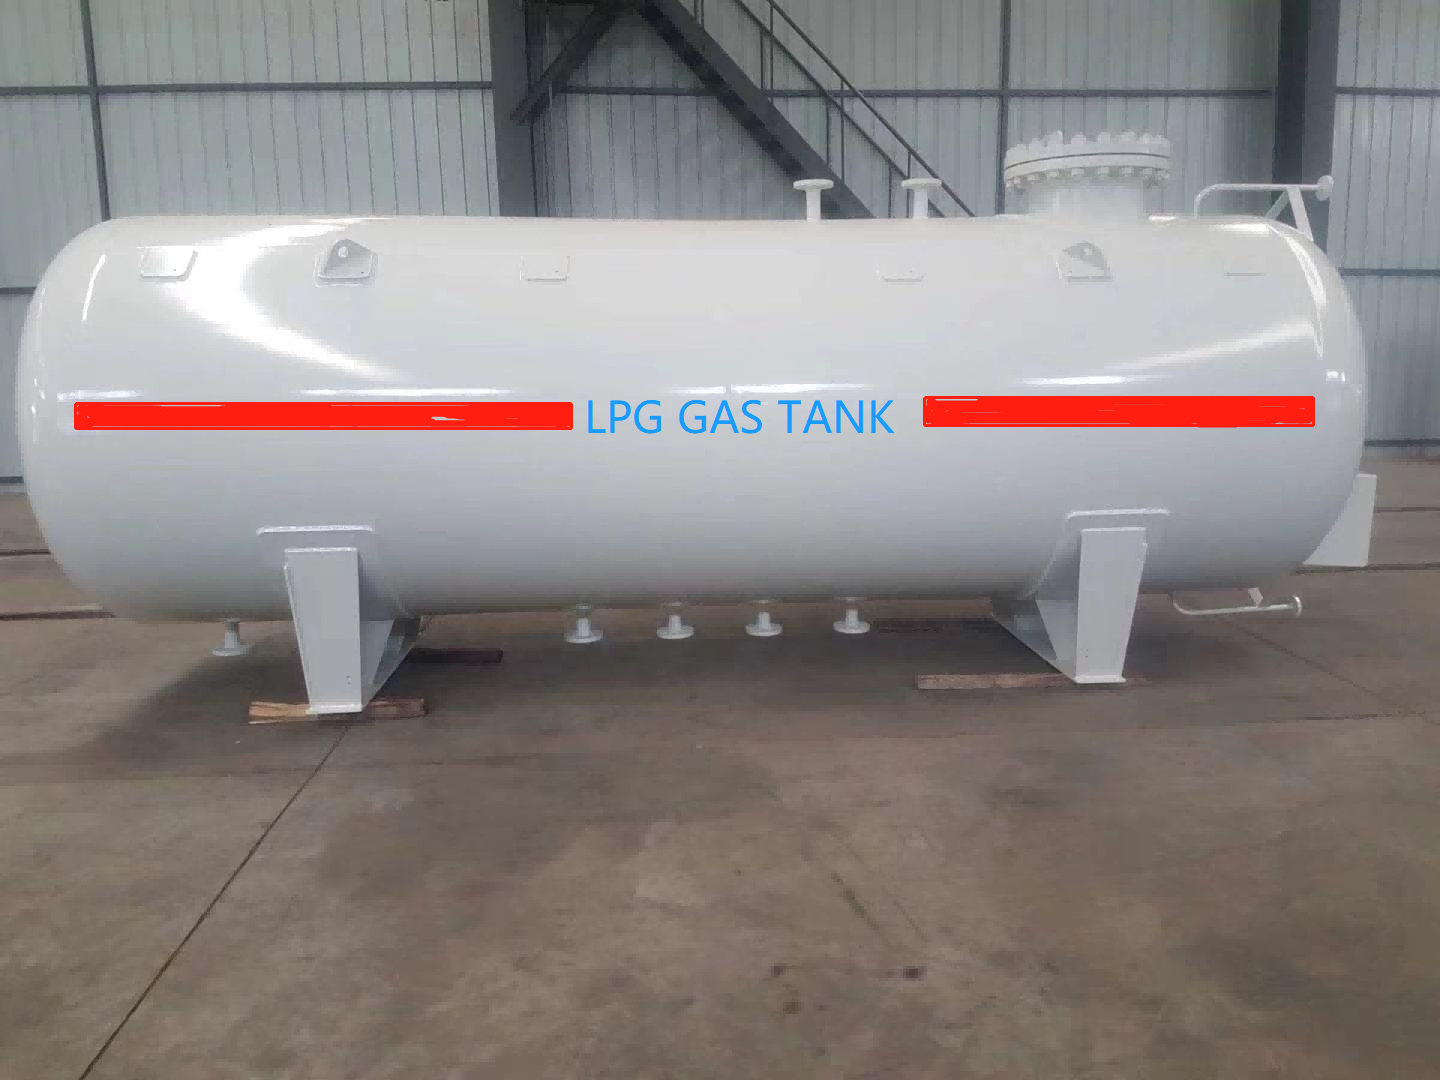 Inspection of LPG storage tank